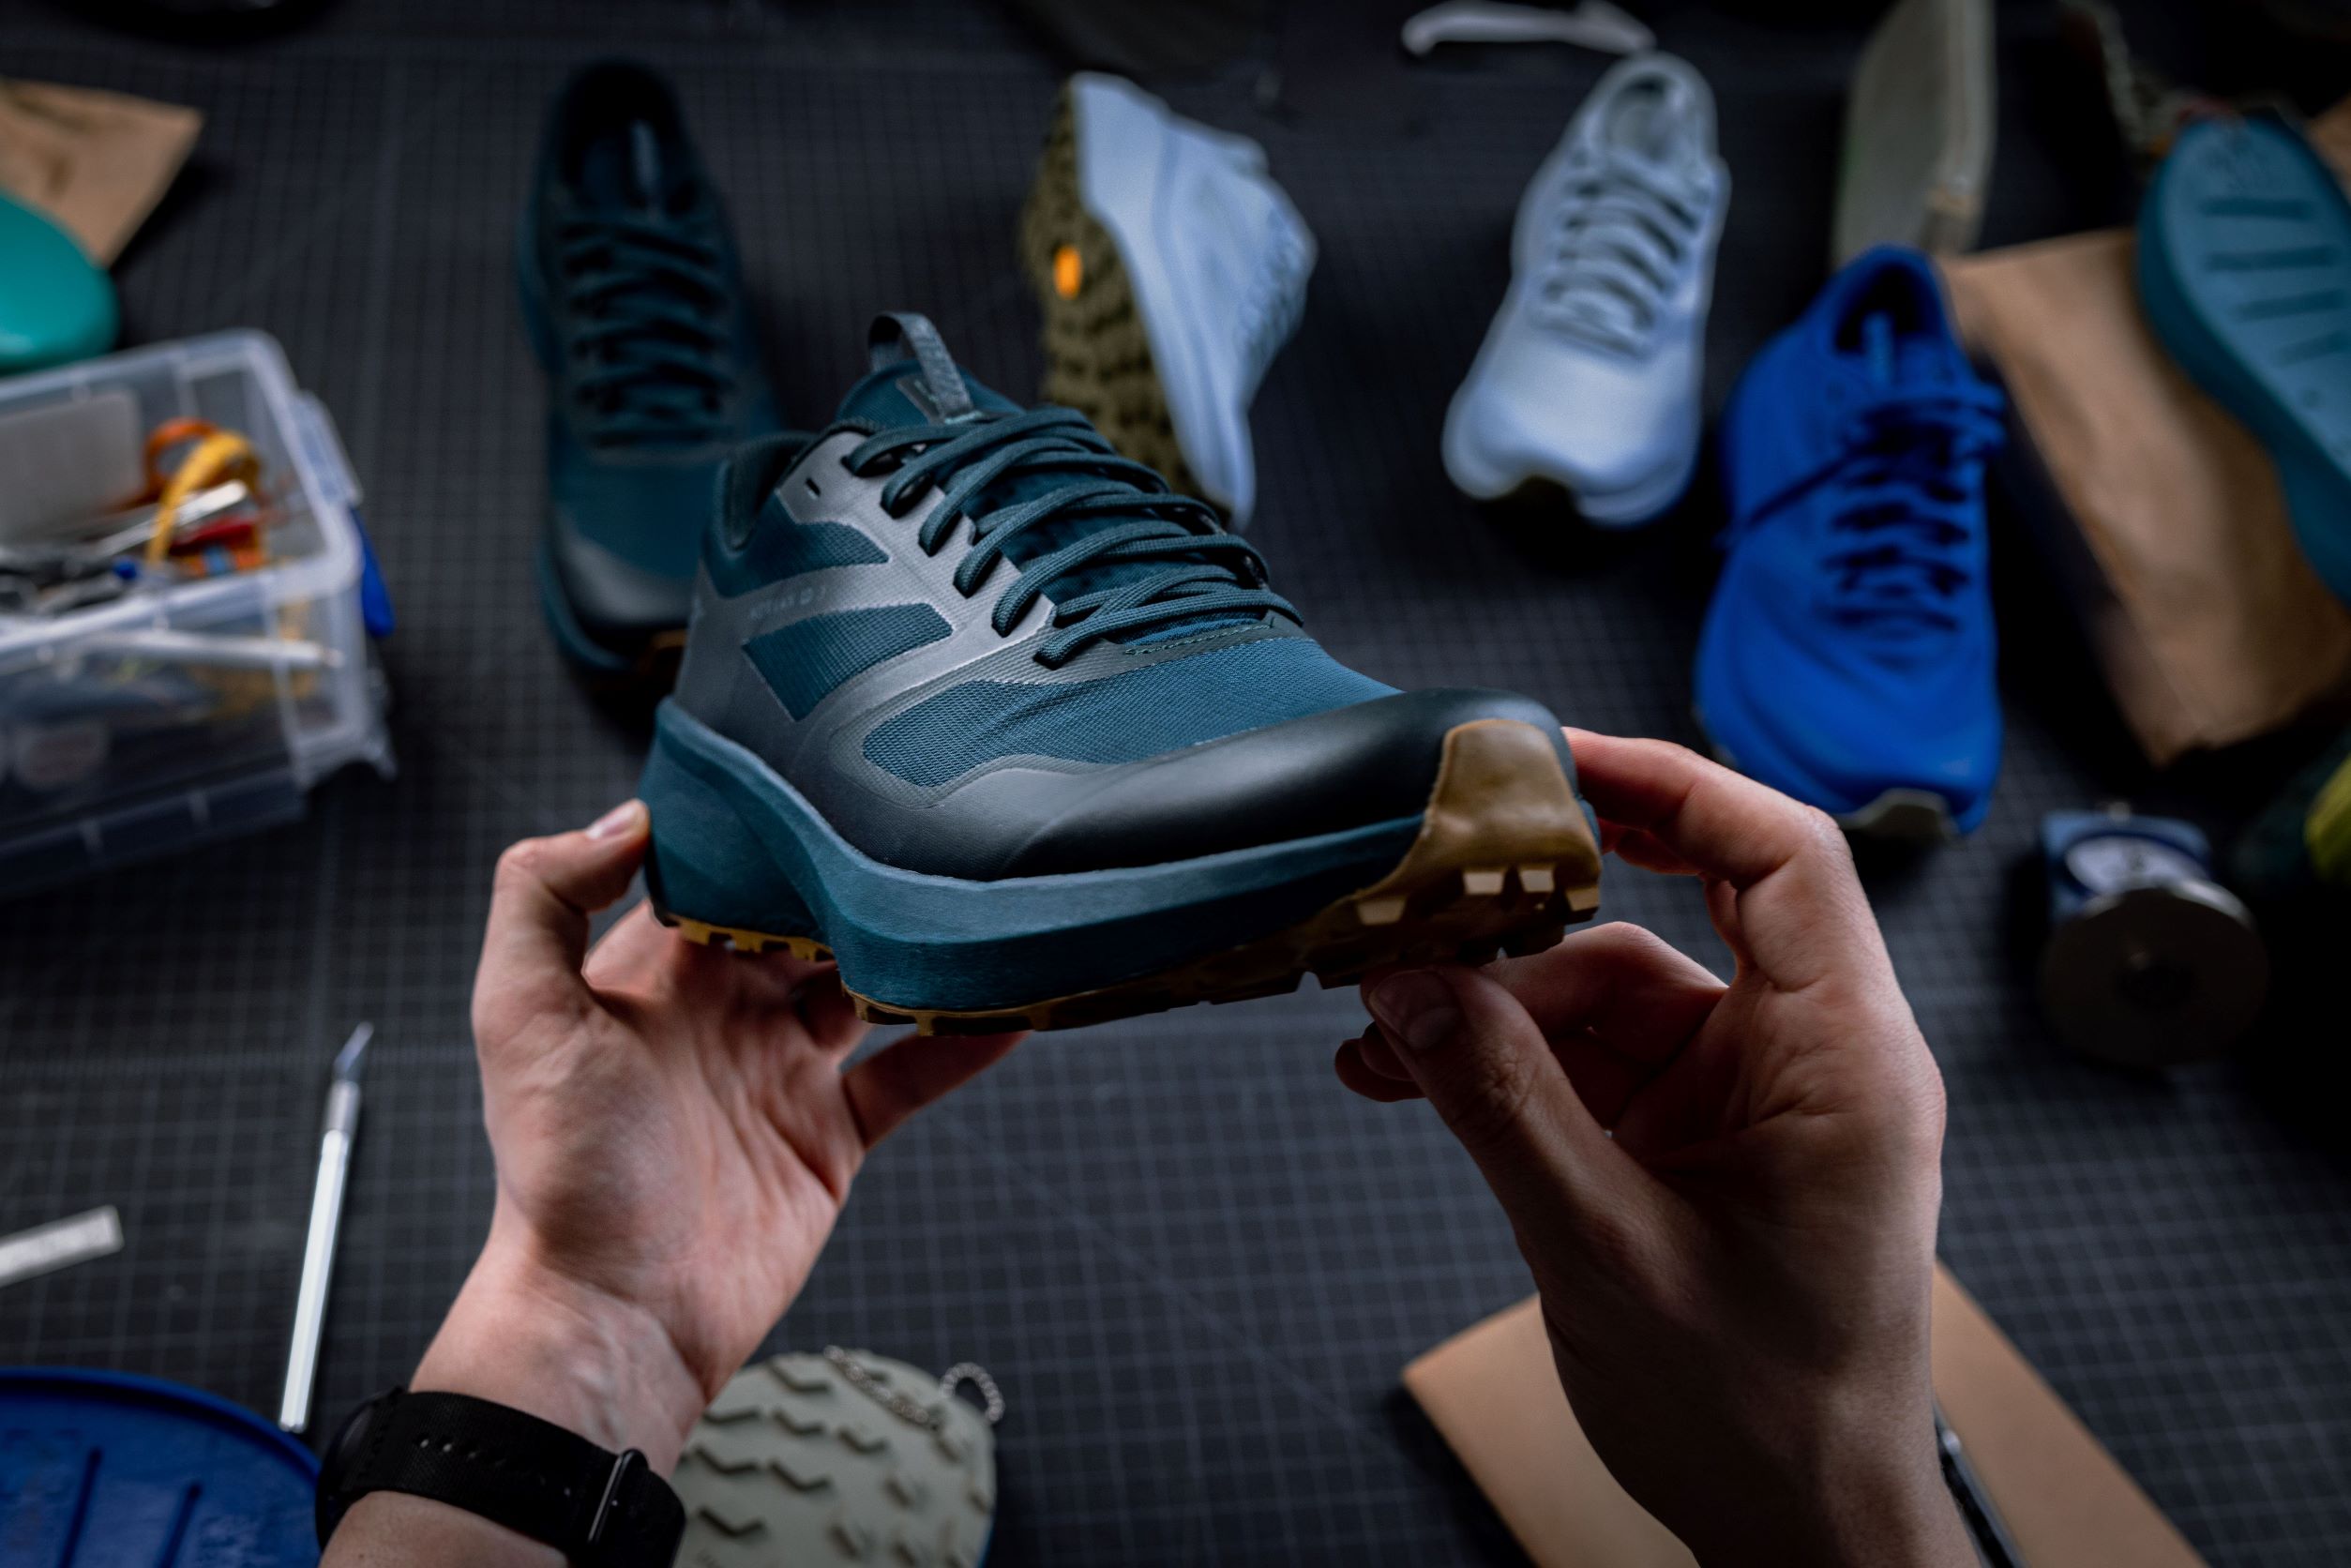 Arc’teryx Footwear Designer Joël Salamin Shares How the New Norvan LD 3 Shoe was Born